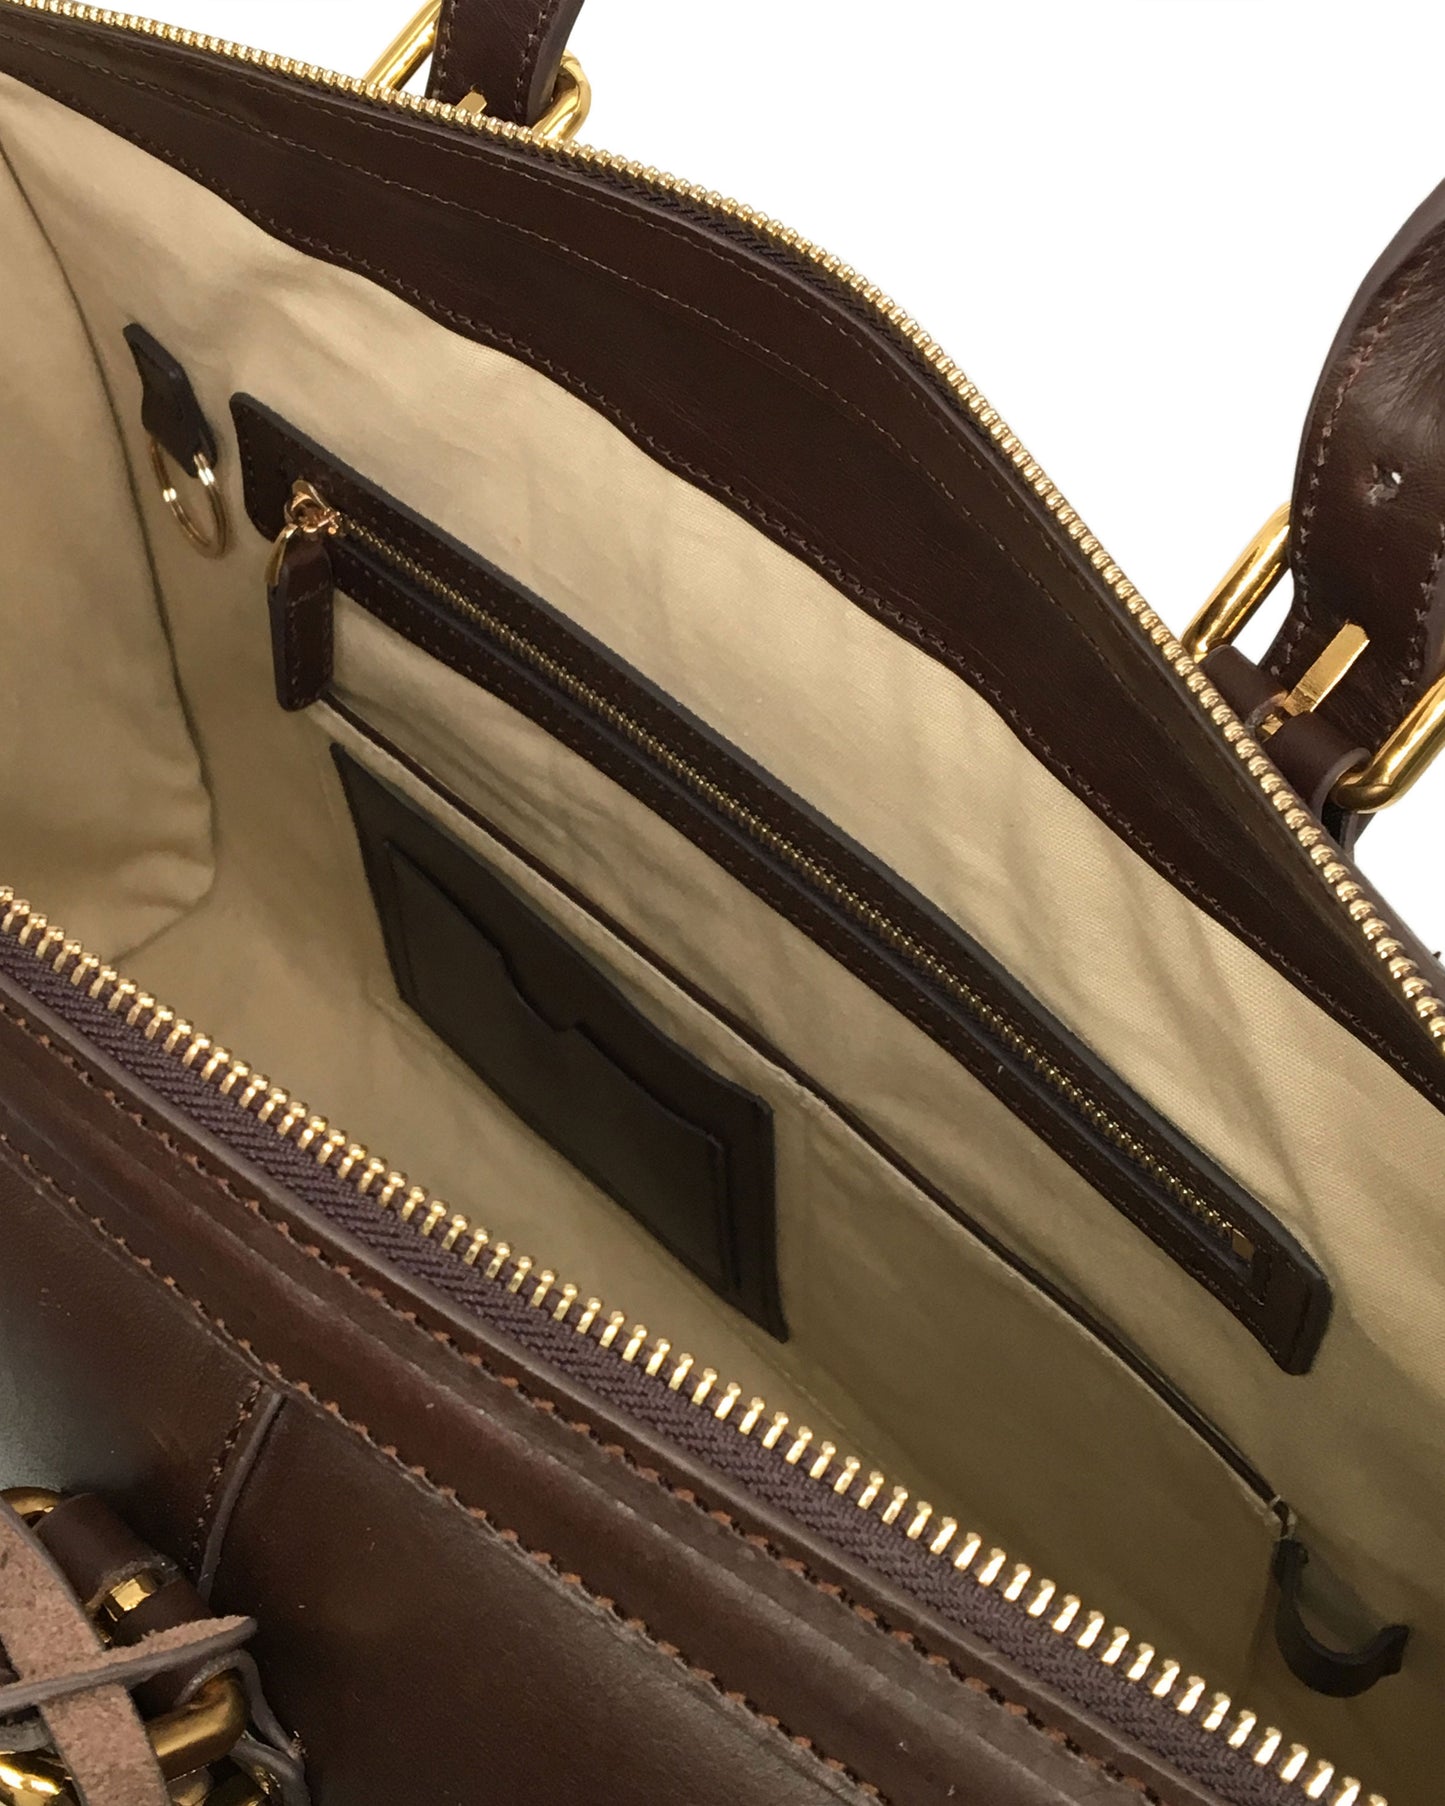 Viaggio 皮革行李袋（黑巧克力色）